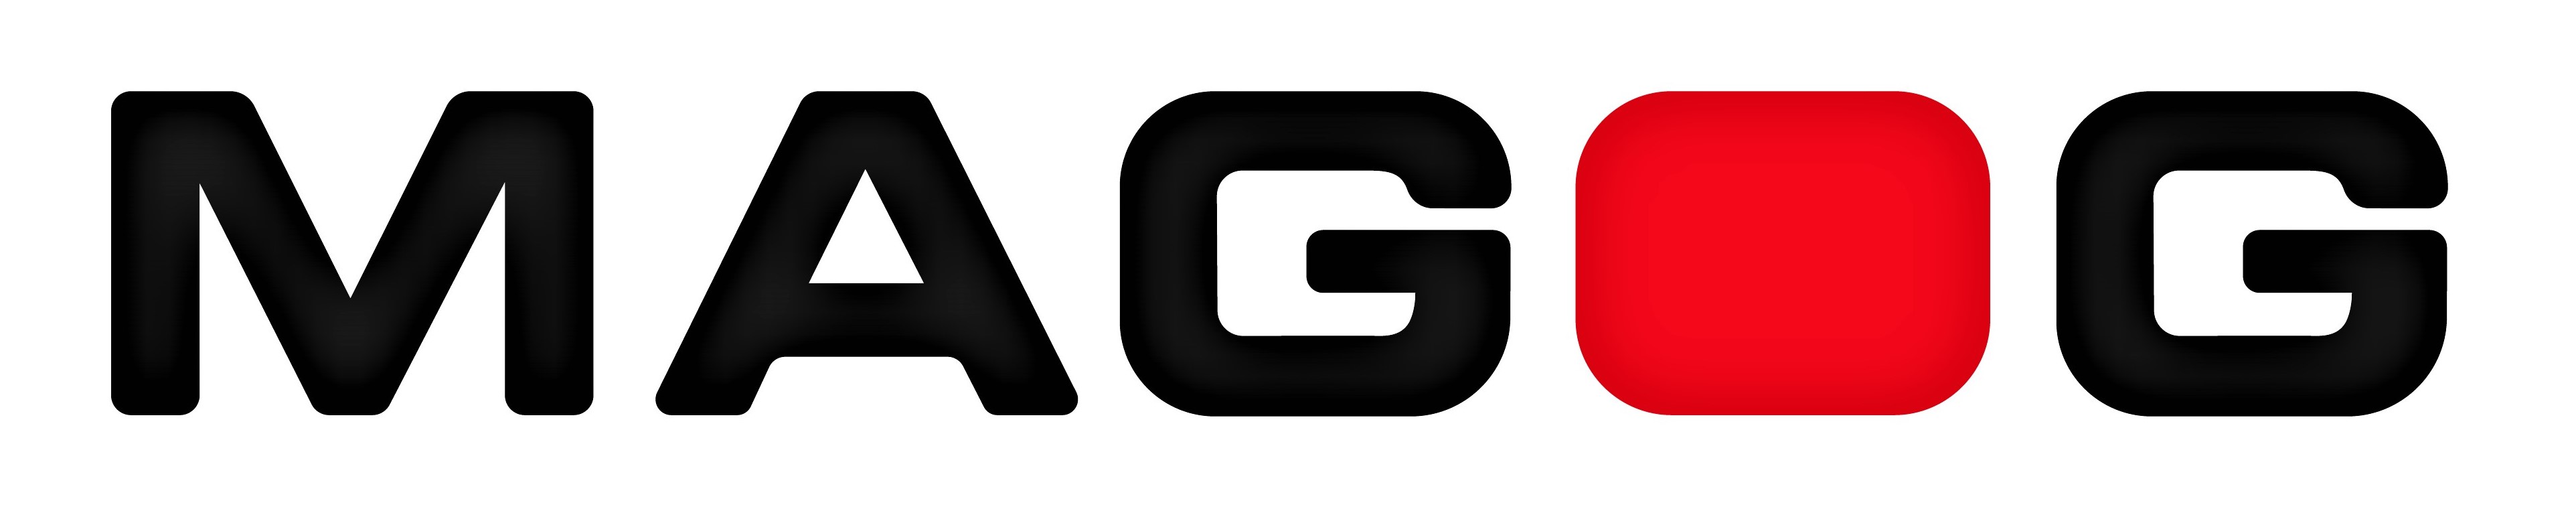 Magog Industries Ltd